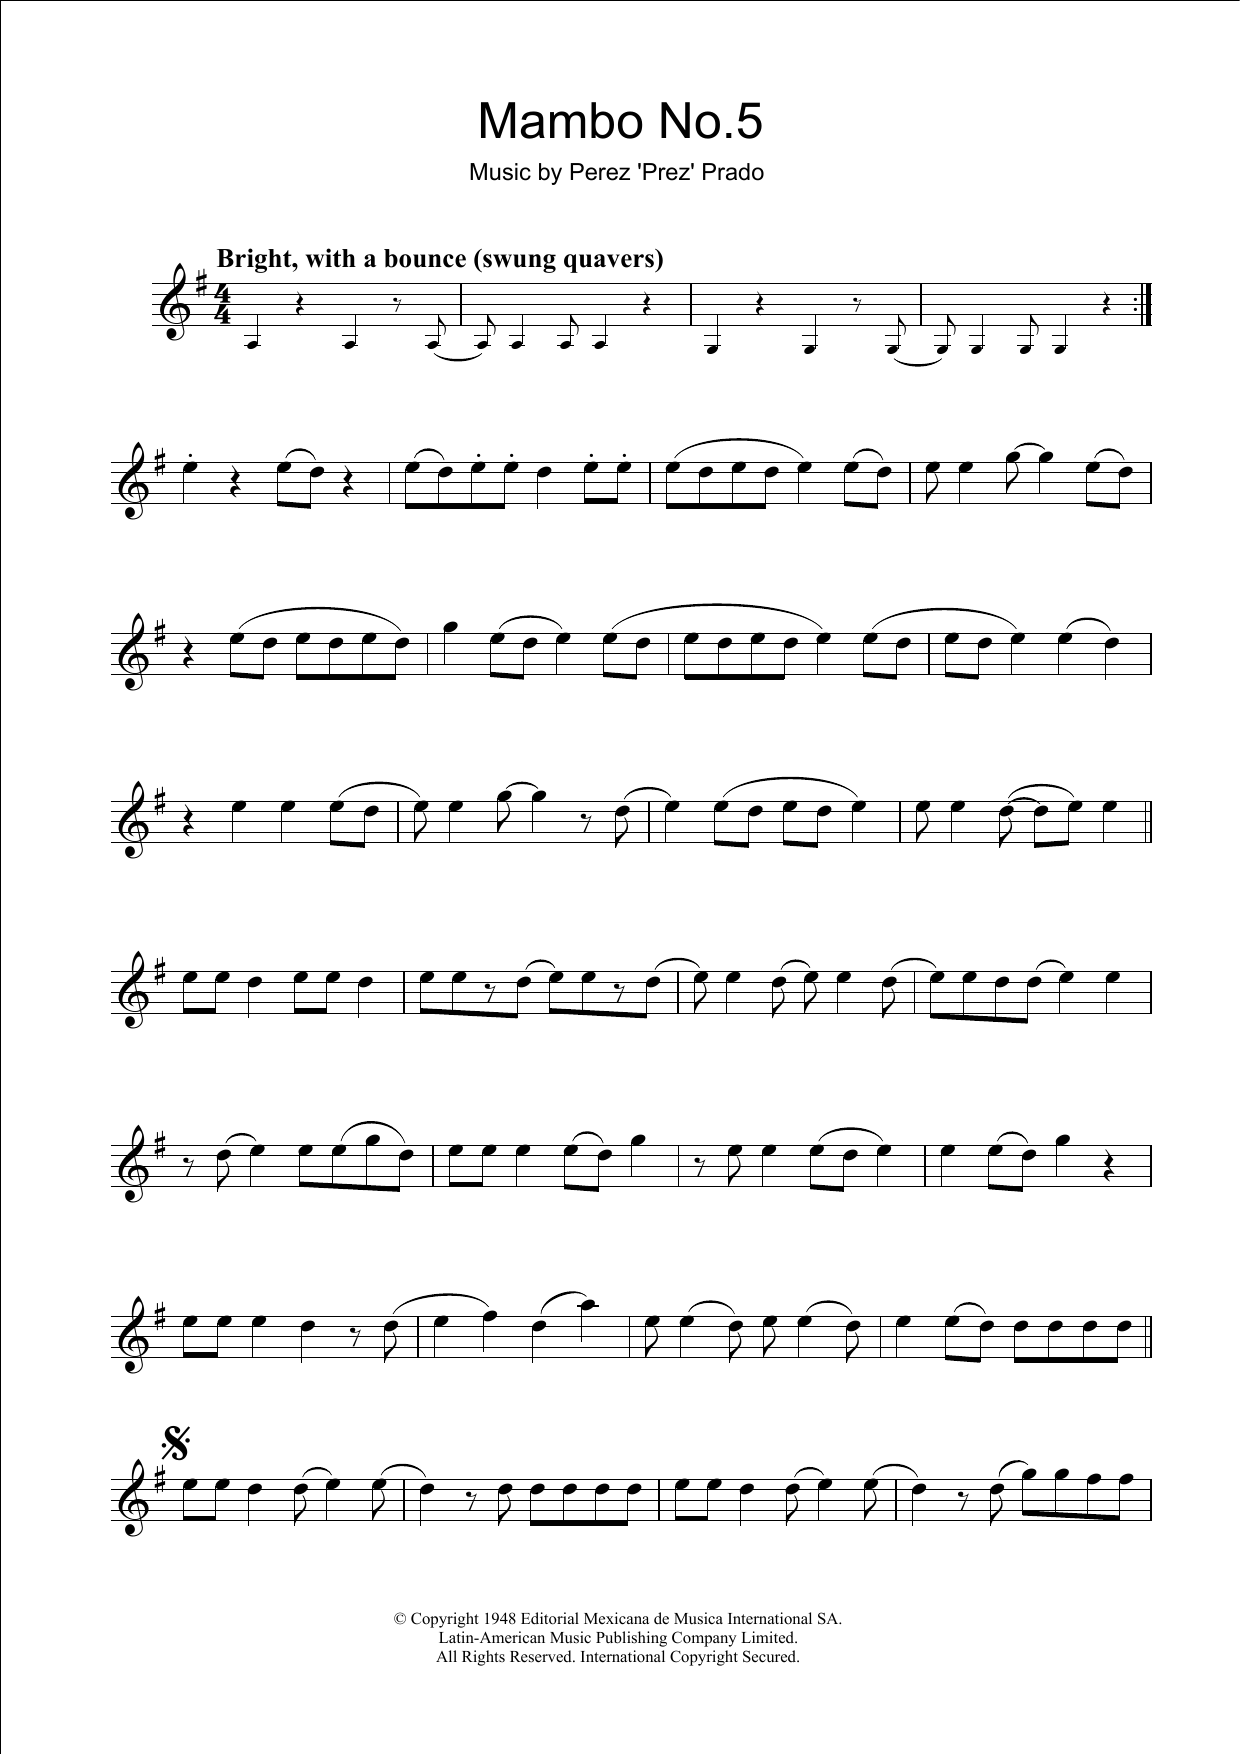 Perez Prado Mambo No. 5 Sheet Music Notes & Chords for Flute - Download or Print PDF